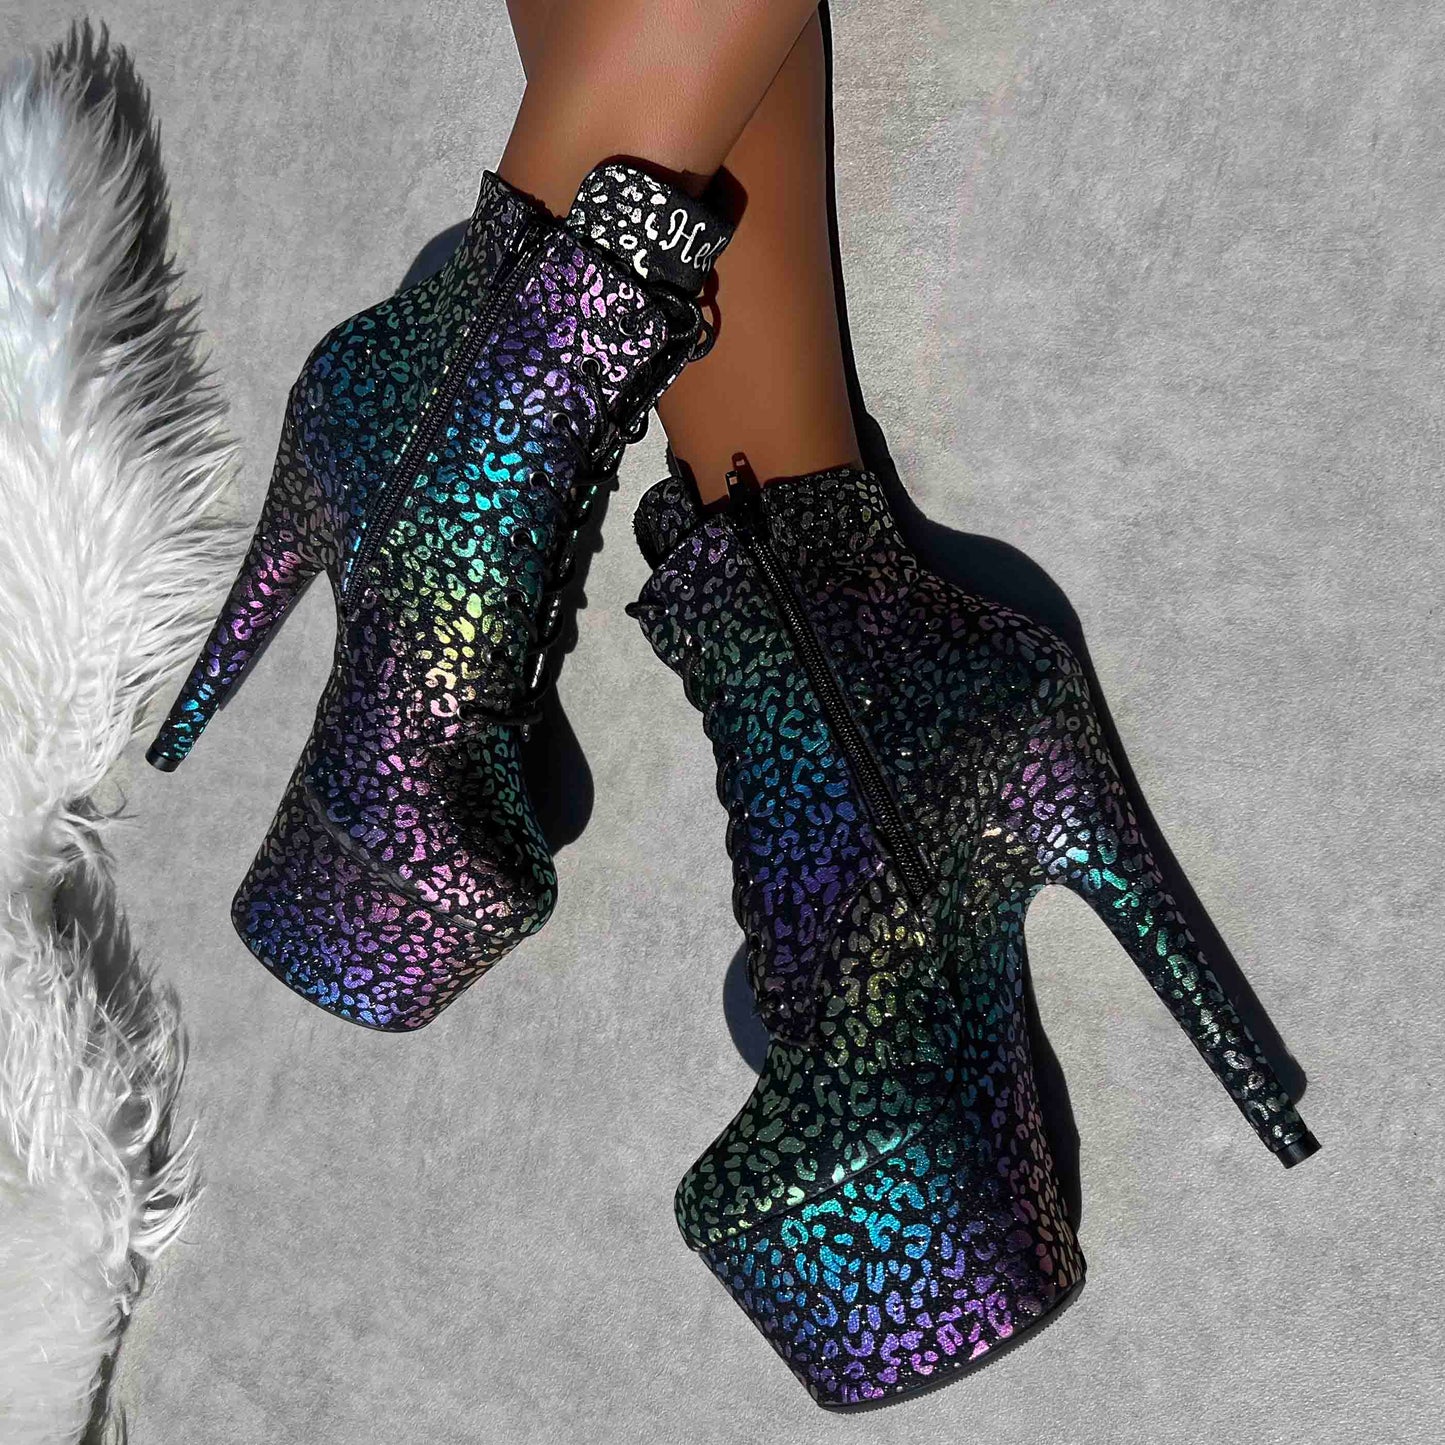 Moonlight Leopard Ankle Boot - 7INCH, stripper shoe, stripper heel, pole heel, not a pleaser, platform, dancer, pole dance, floor work